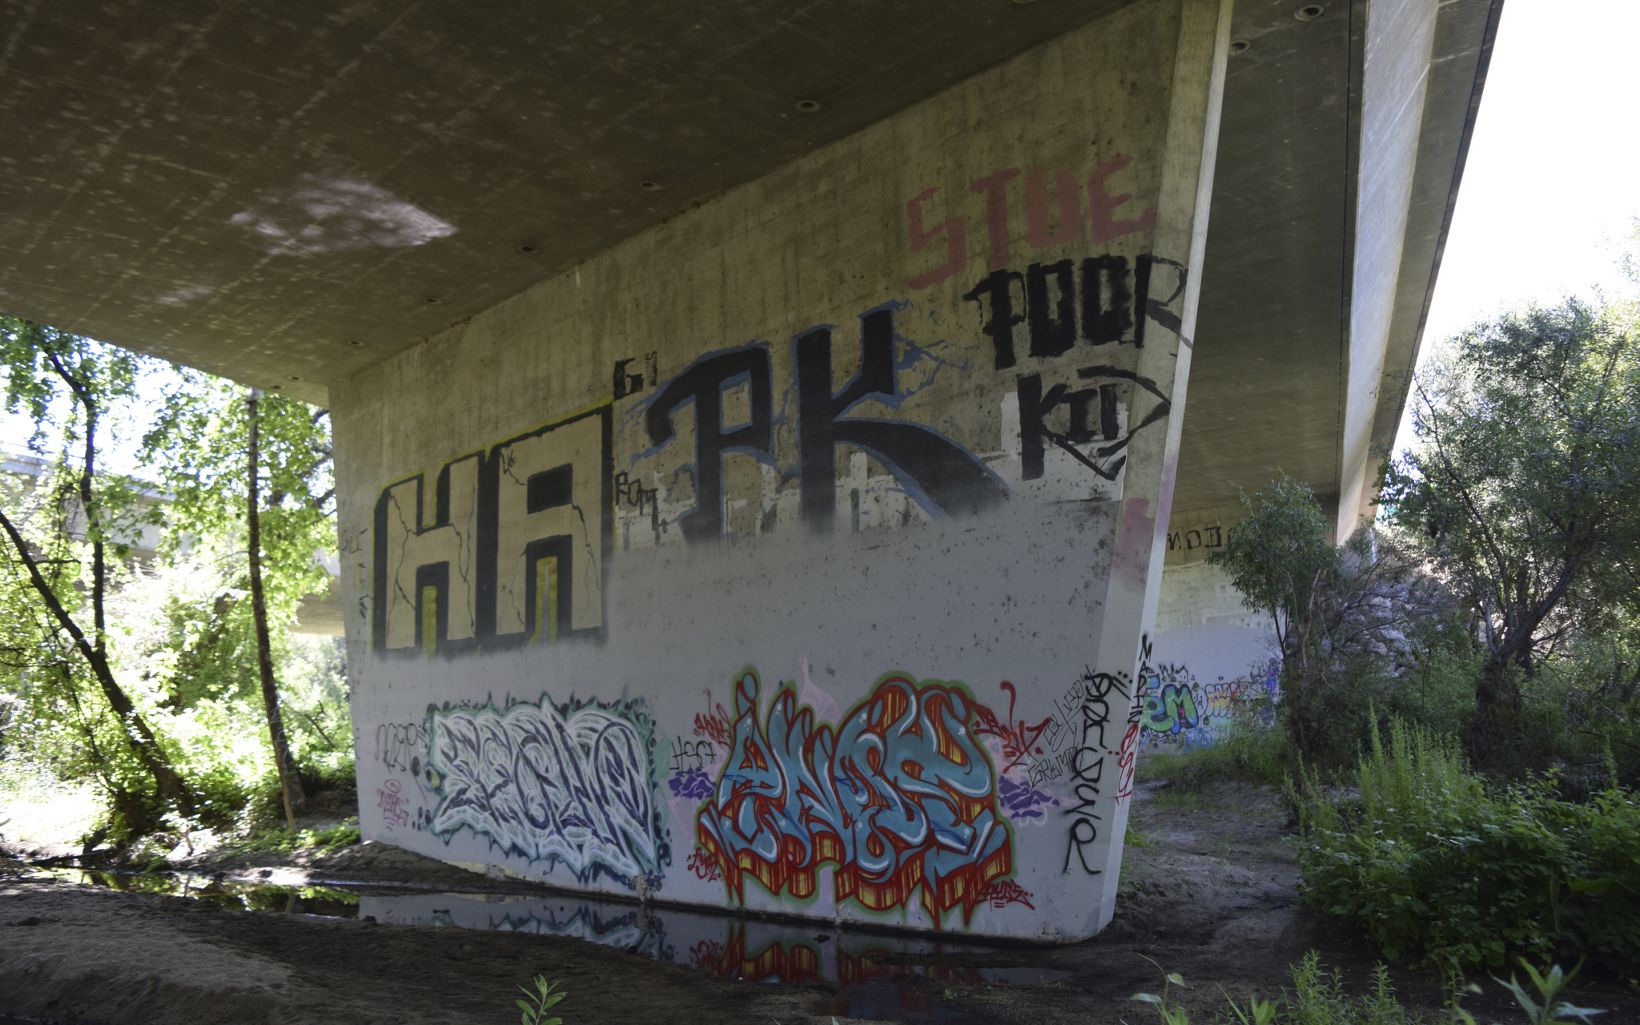 concrete support of a bridge with graffiti on it